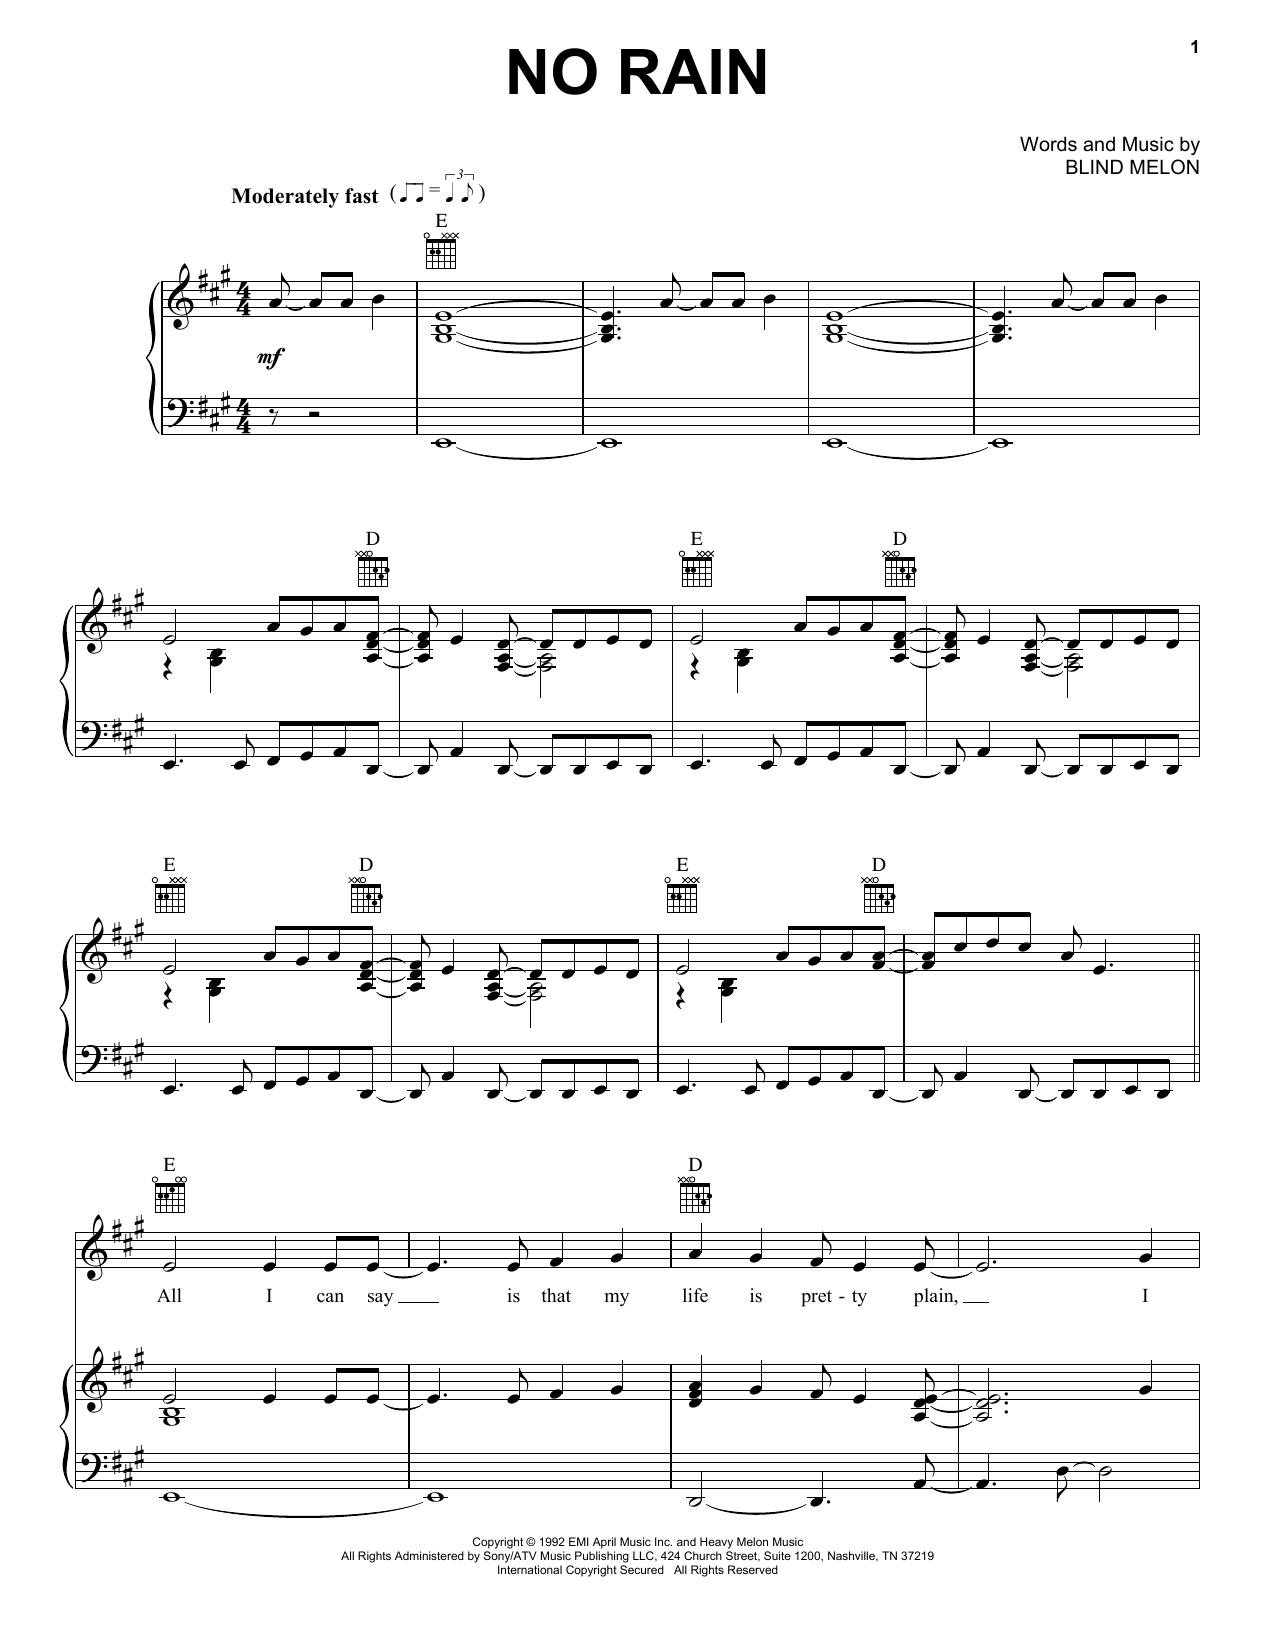 Blind Melon No Rain Sheet Music Notes & Chords for Ukulele - Download or Print PDF